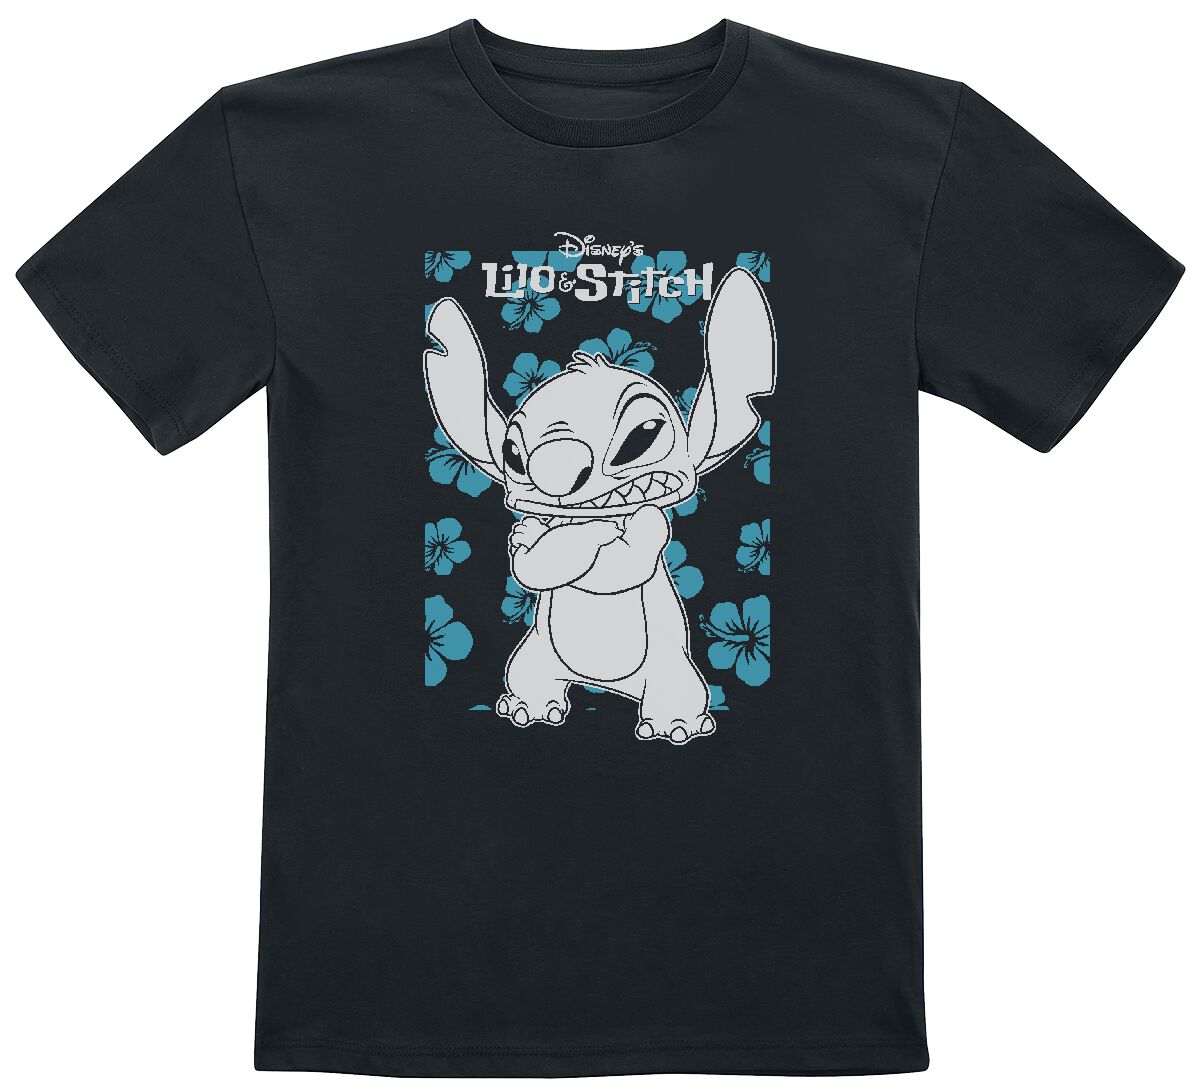 Lilo & Stitch Kids - Lilo Party T-Shirt black